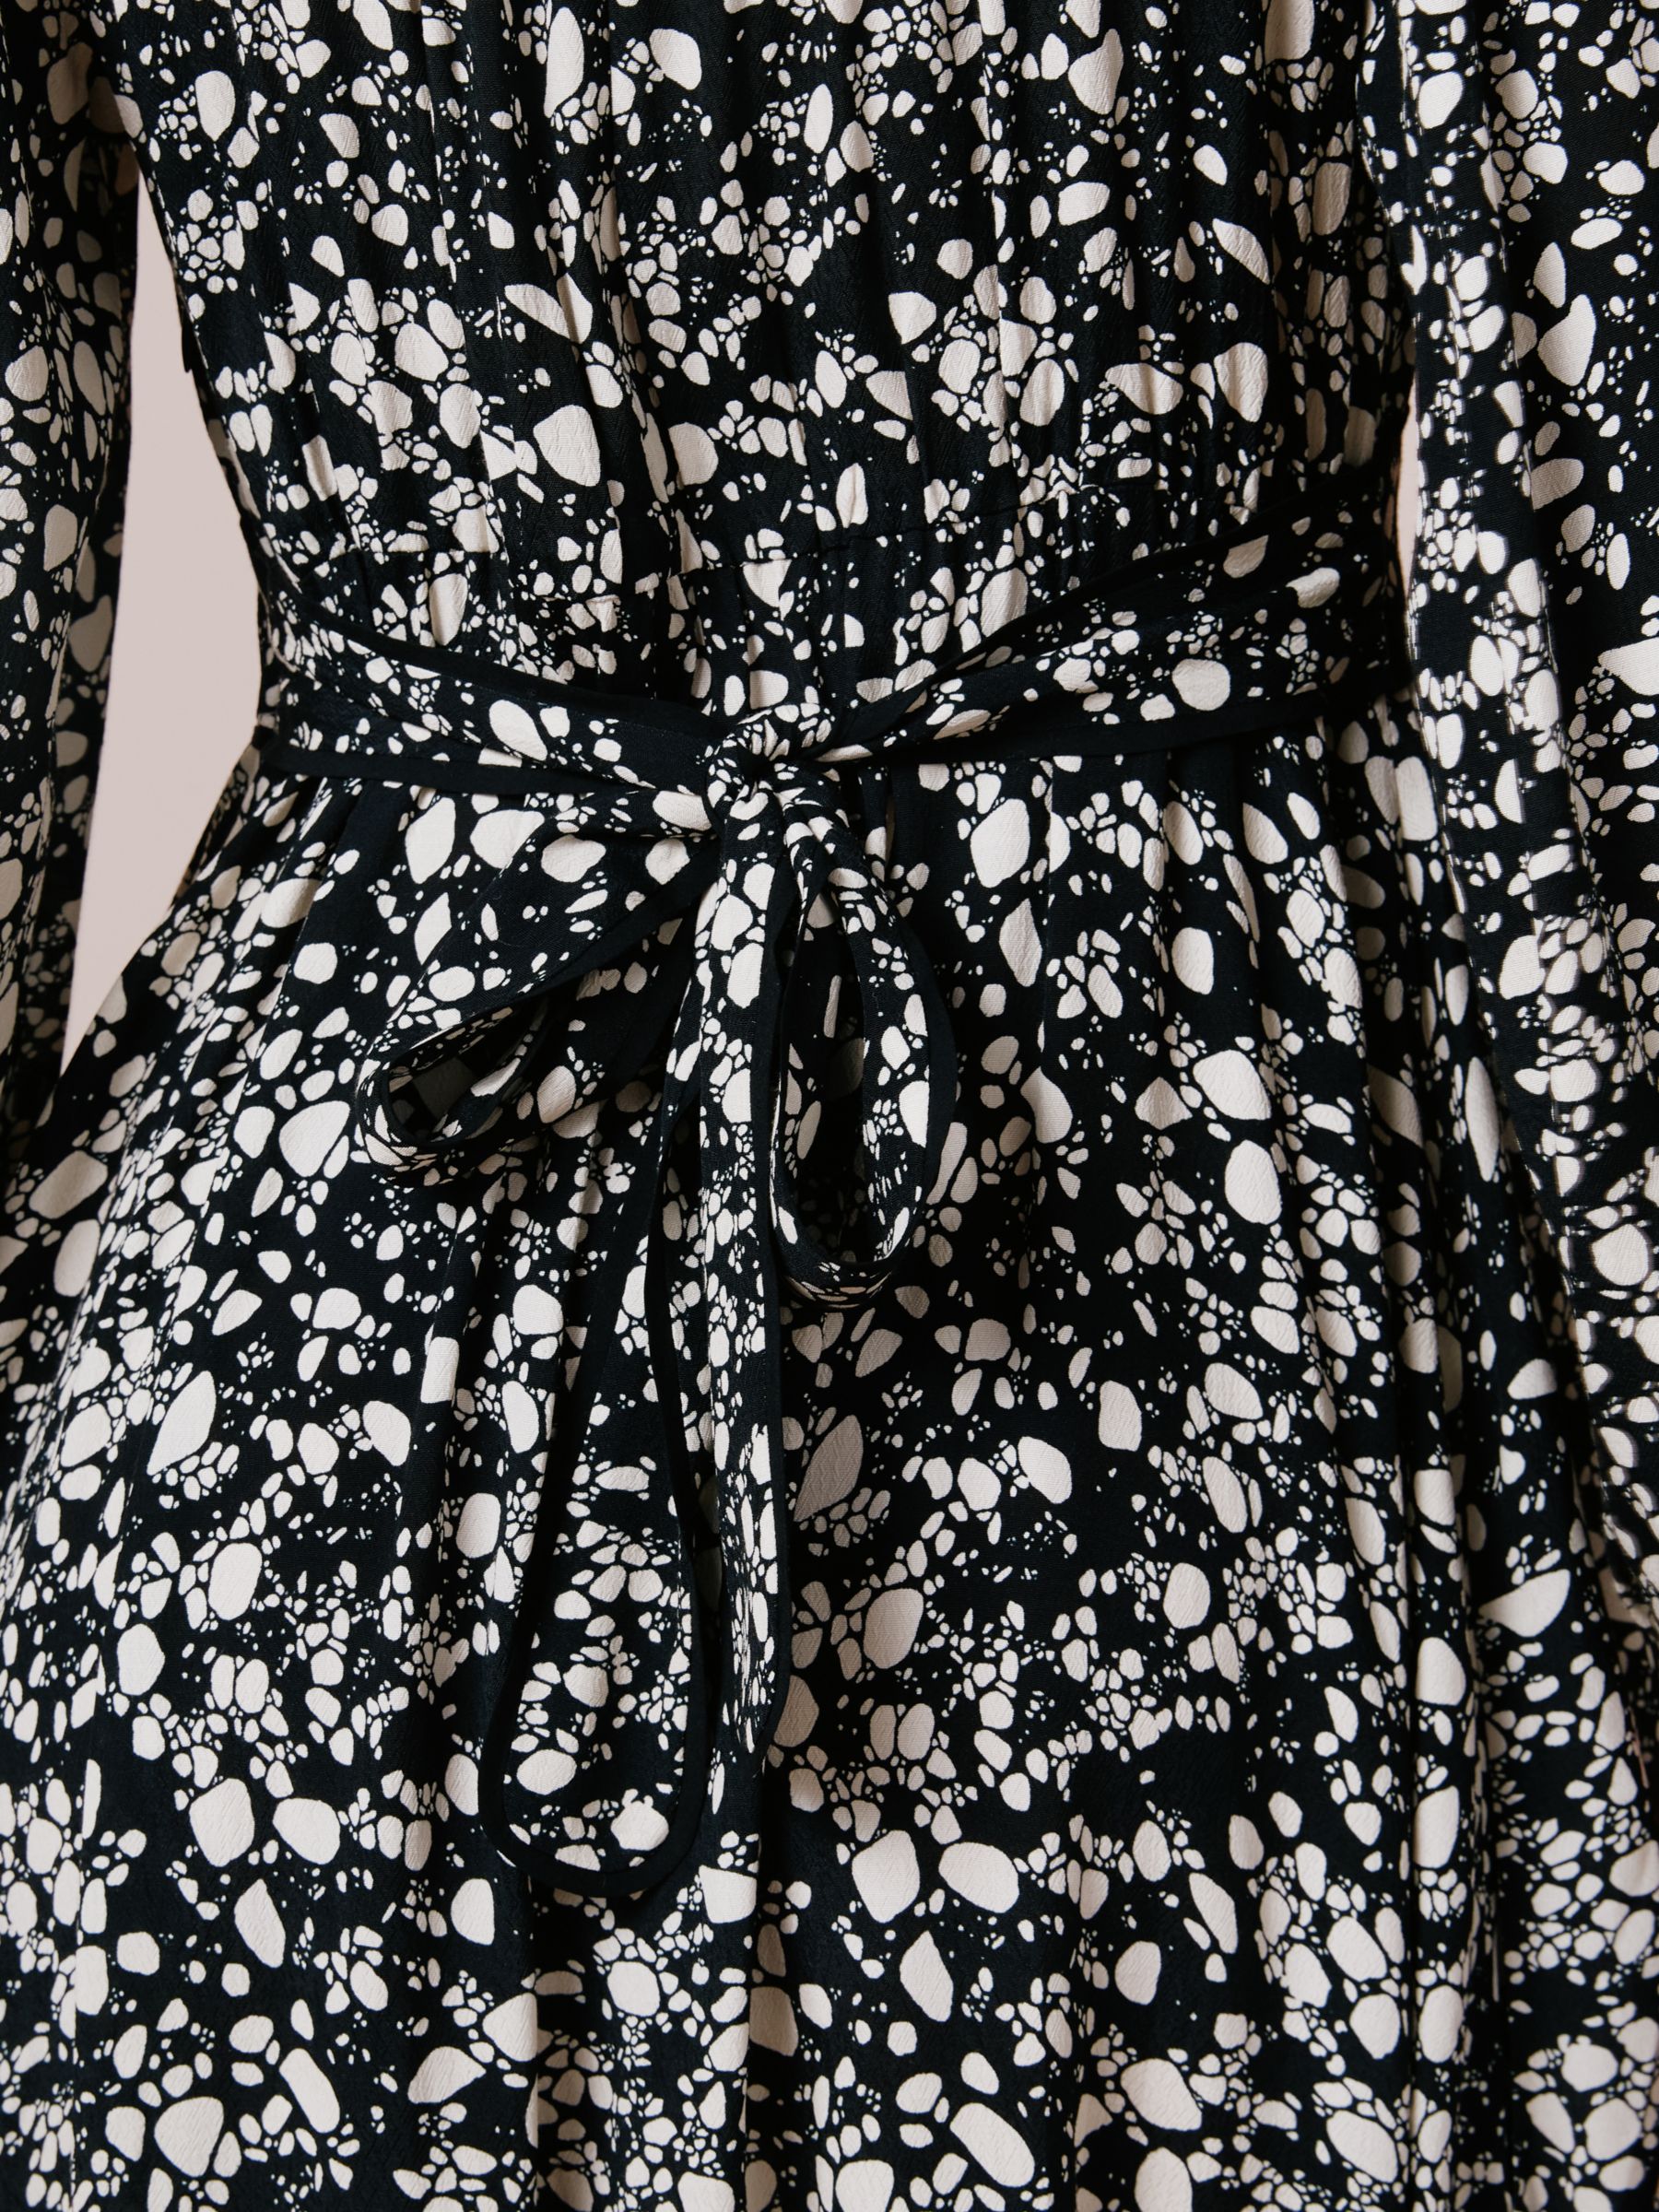 Buy Albaray Pebble Print Midi Dress, Black/White Online at johnlewis.com